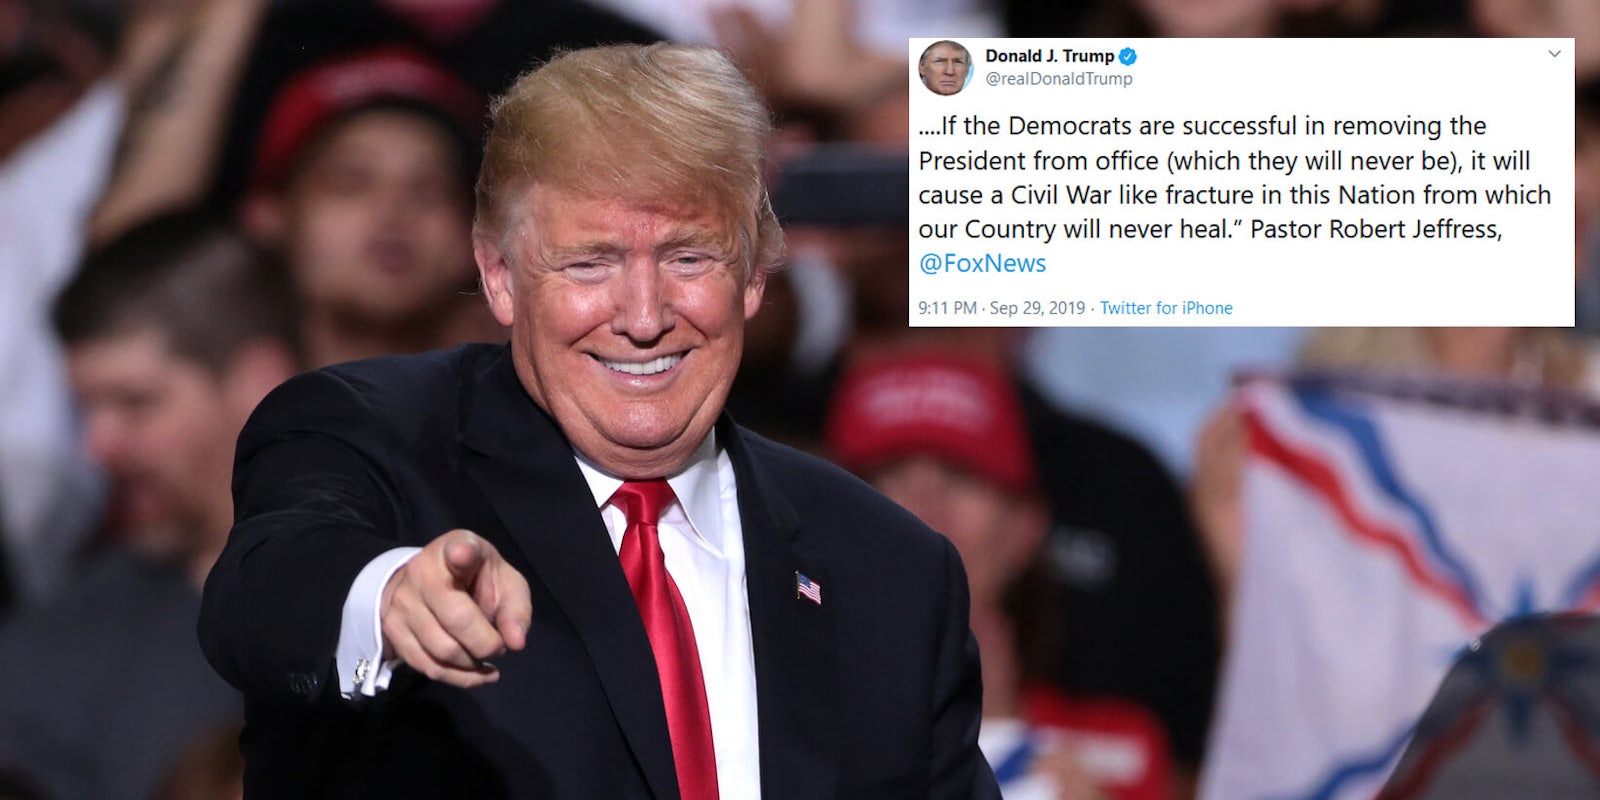 Donald Trump Civil War Quote Tweet